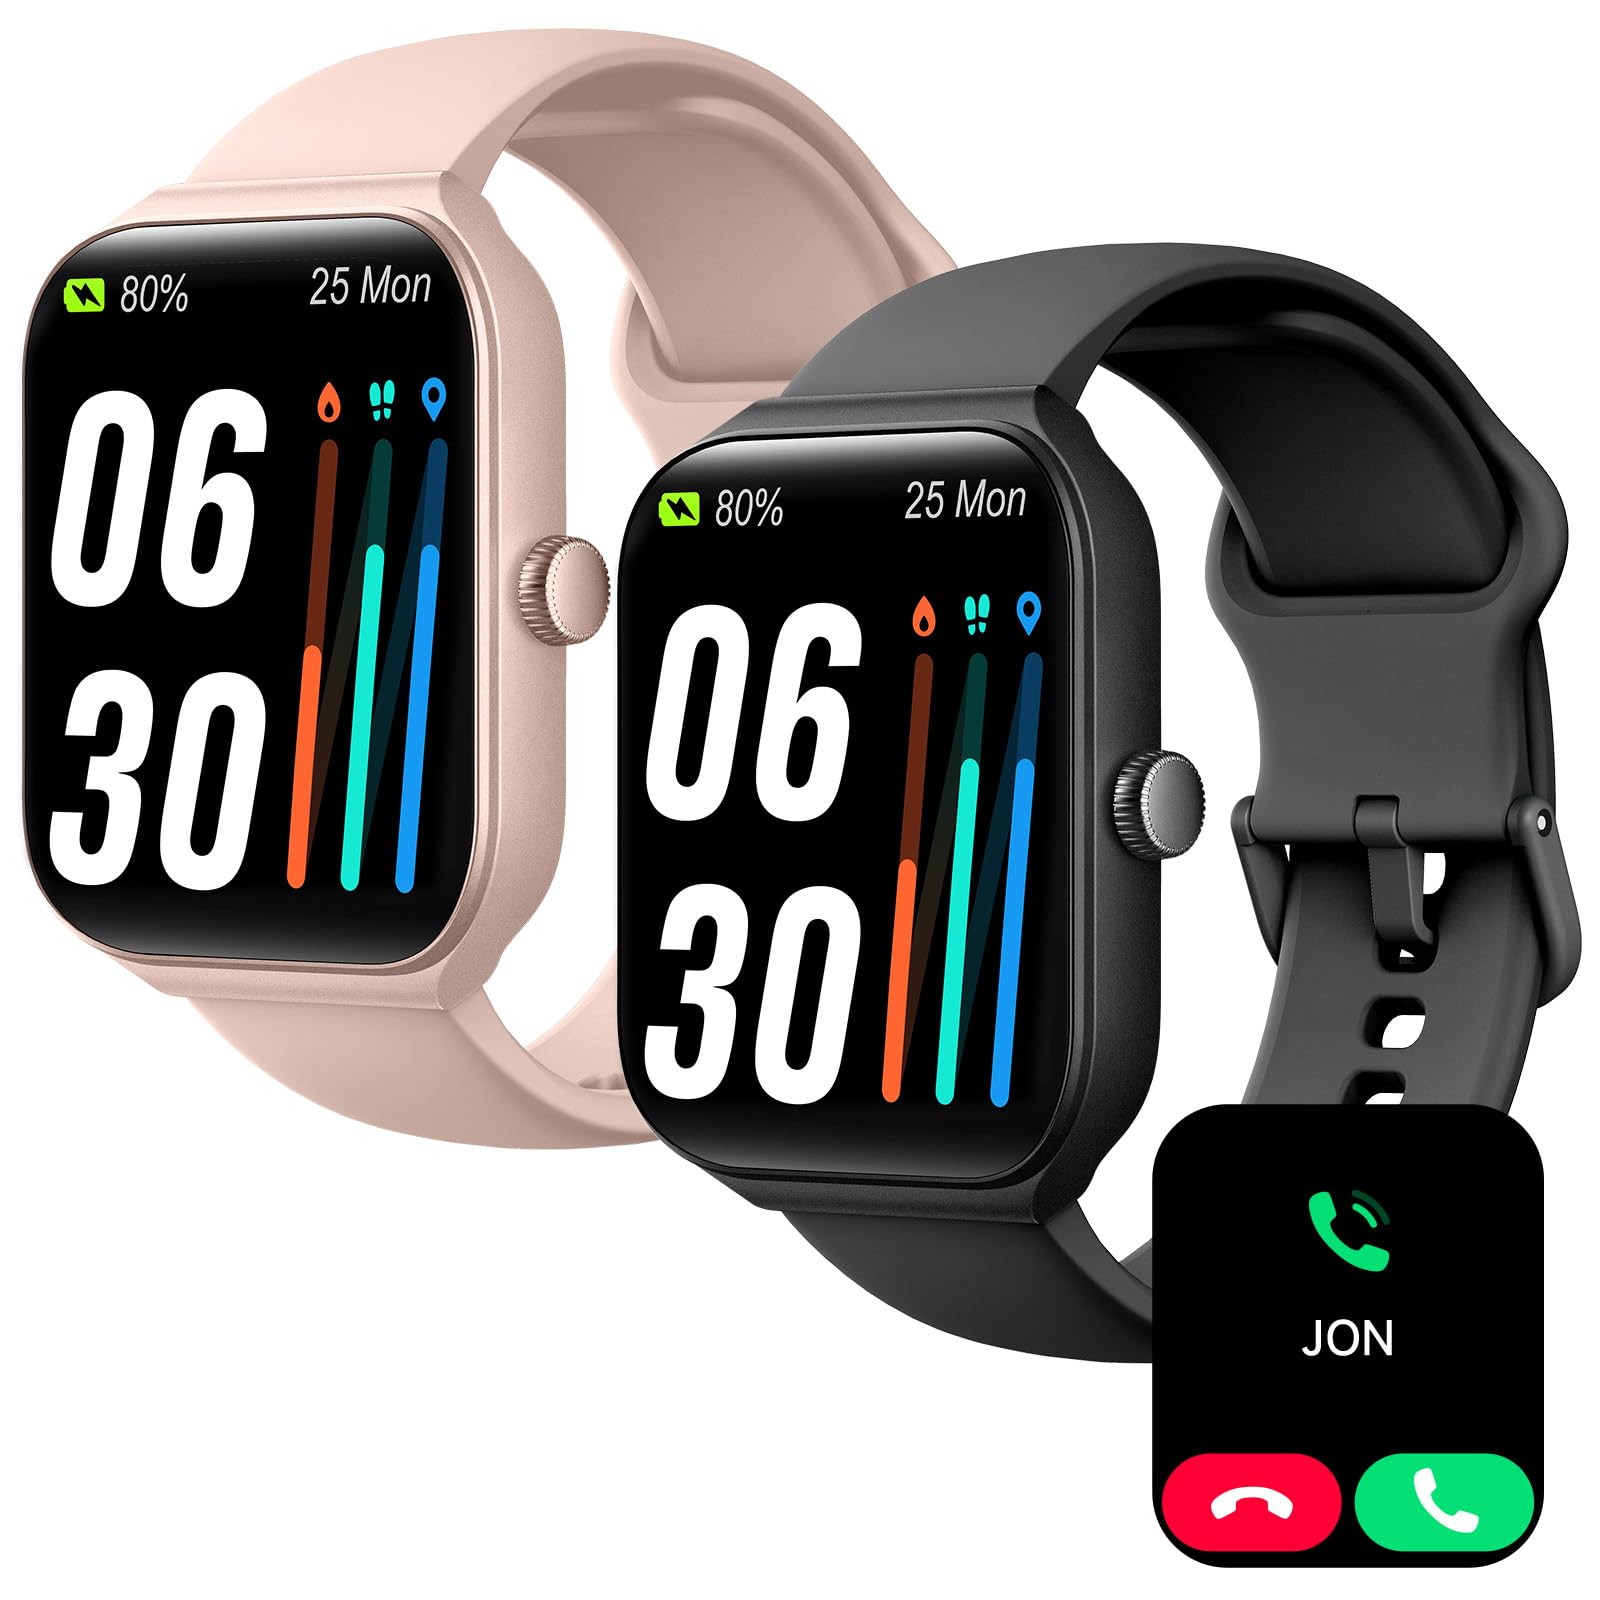 Faweio Smart Watches for Men Women, Alexa Built in & Bluetooth Call(Answer/Make), 1.95